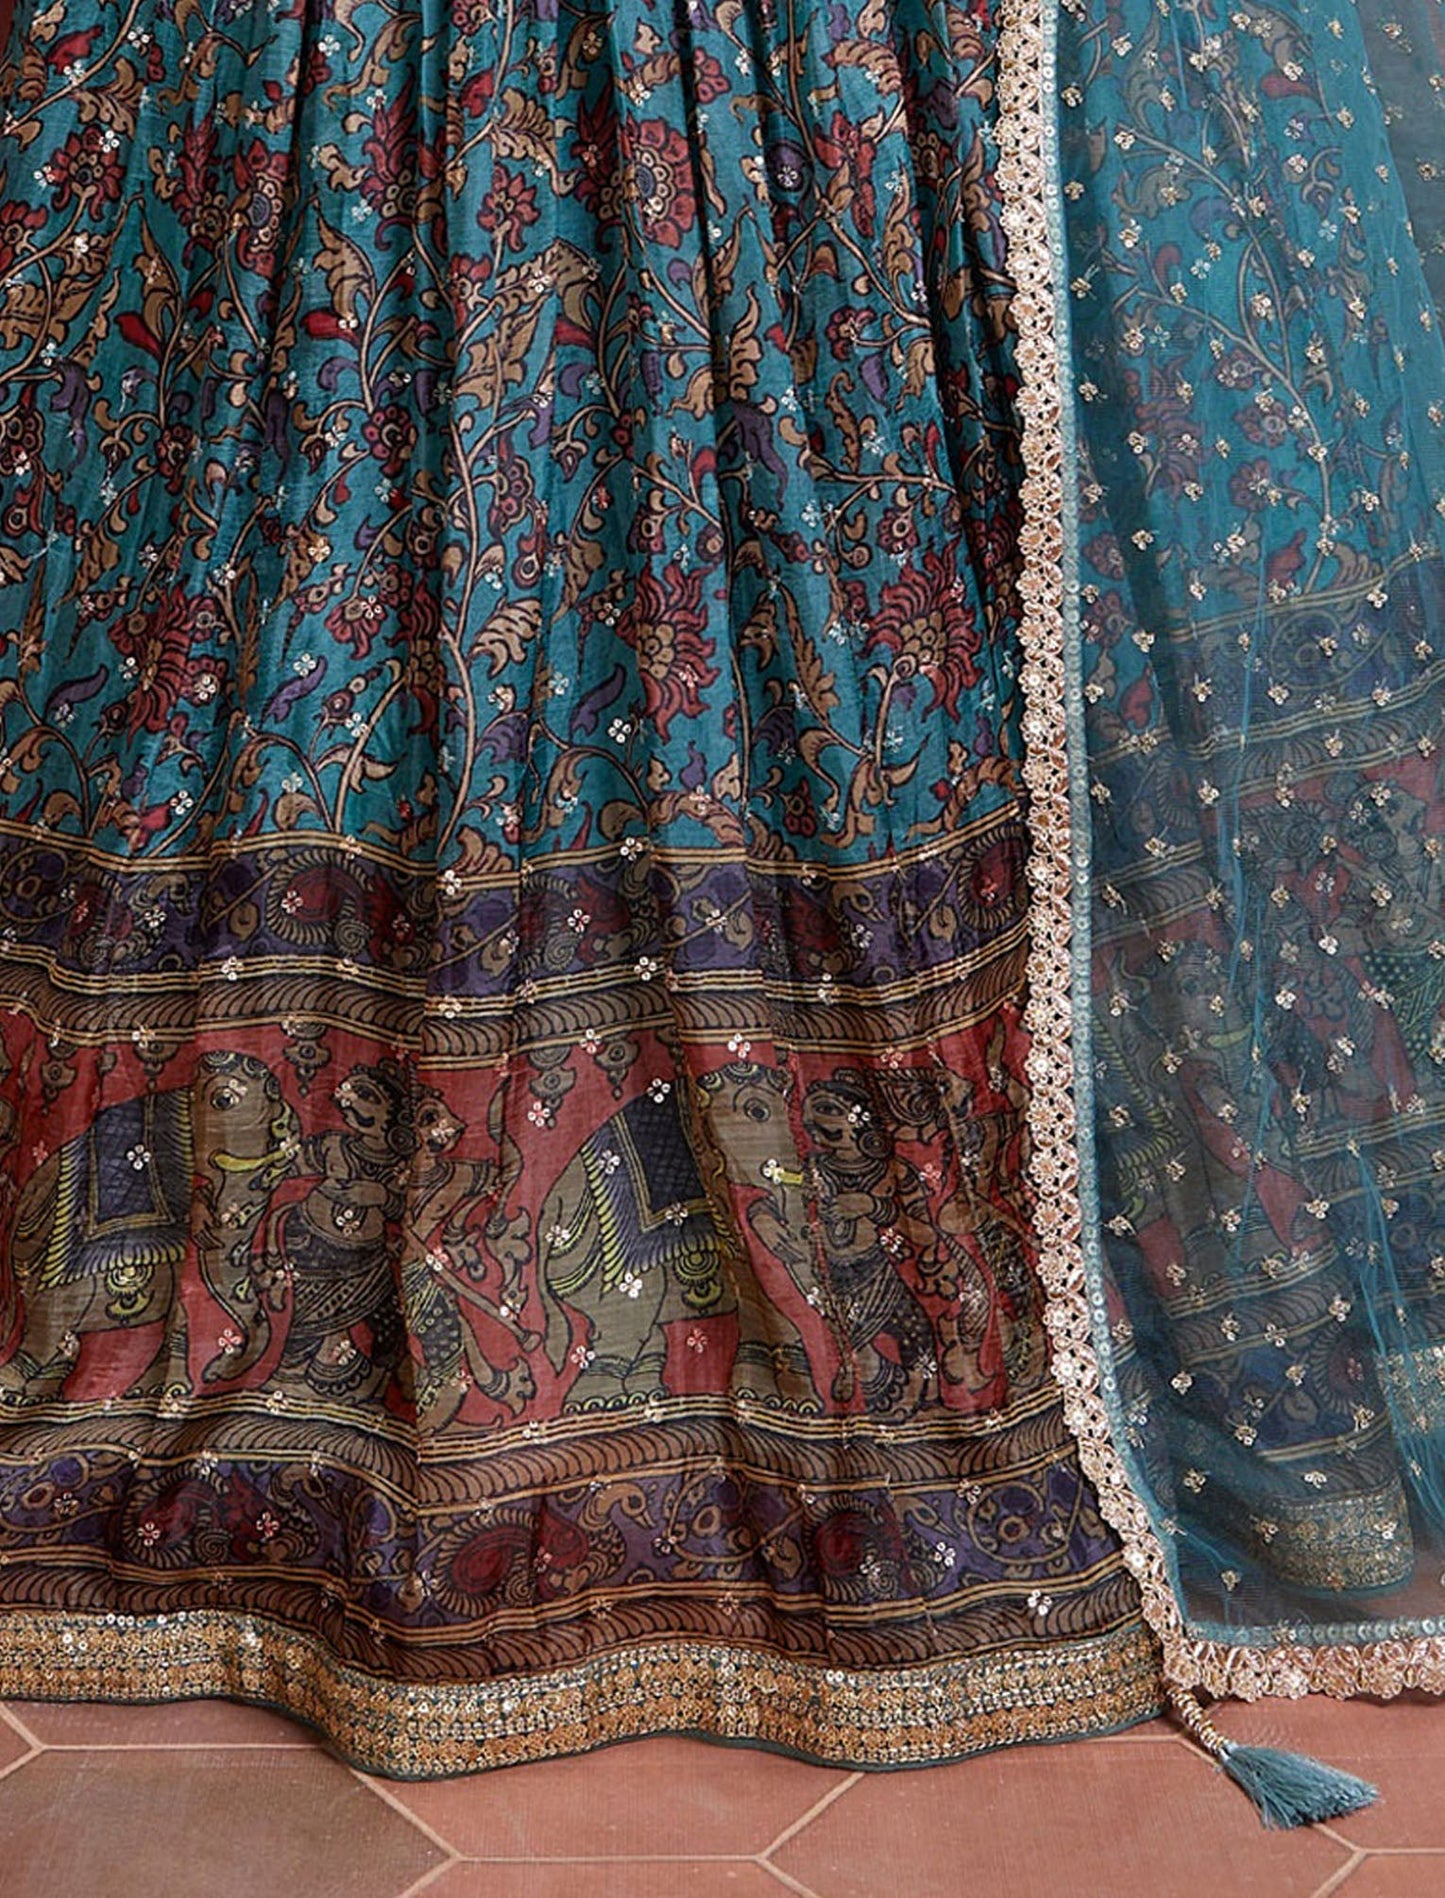 Sky Blue Chinon Silk with Heavy Banglori Silk Blouse & Dupatta Lehenga Choli Set For Women